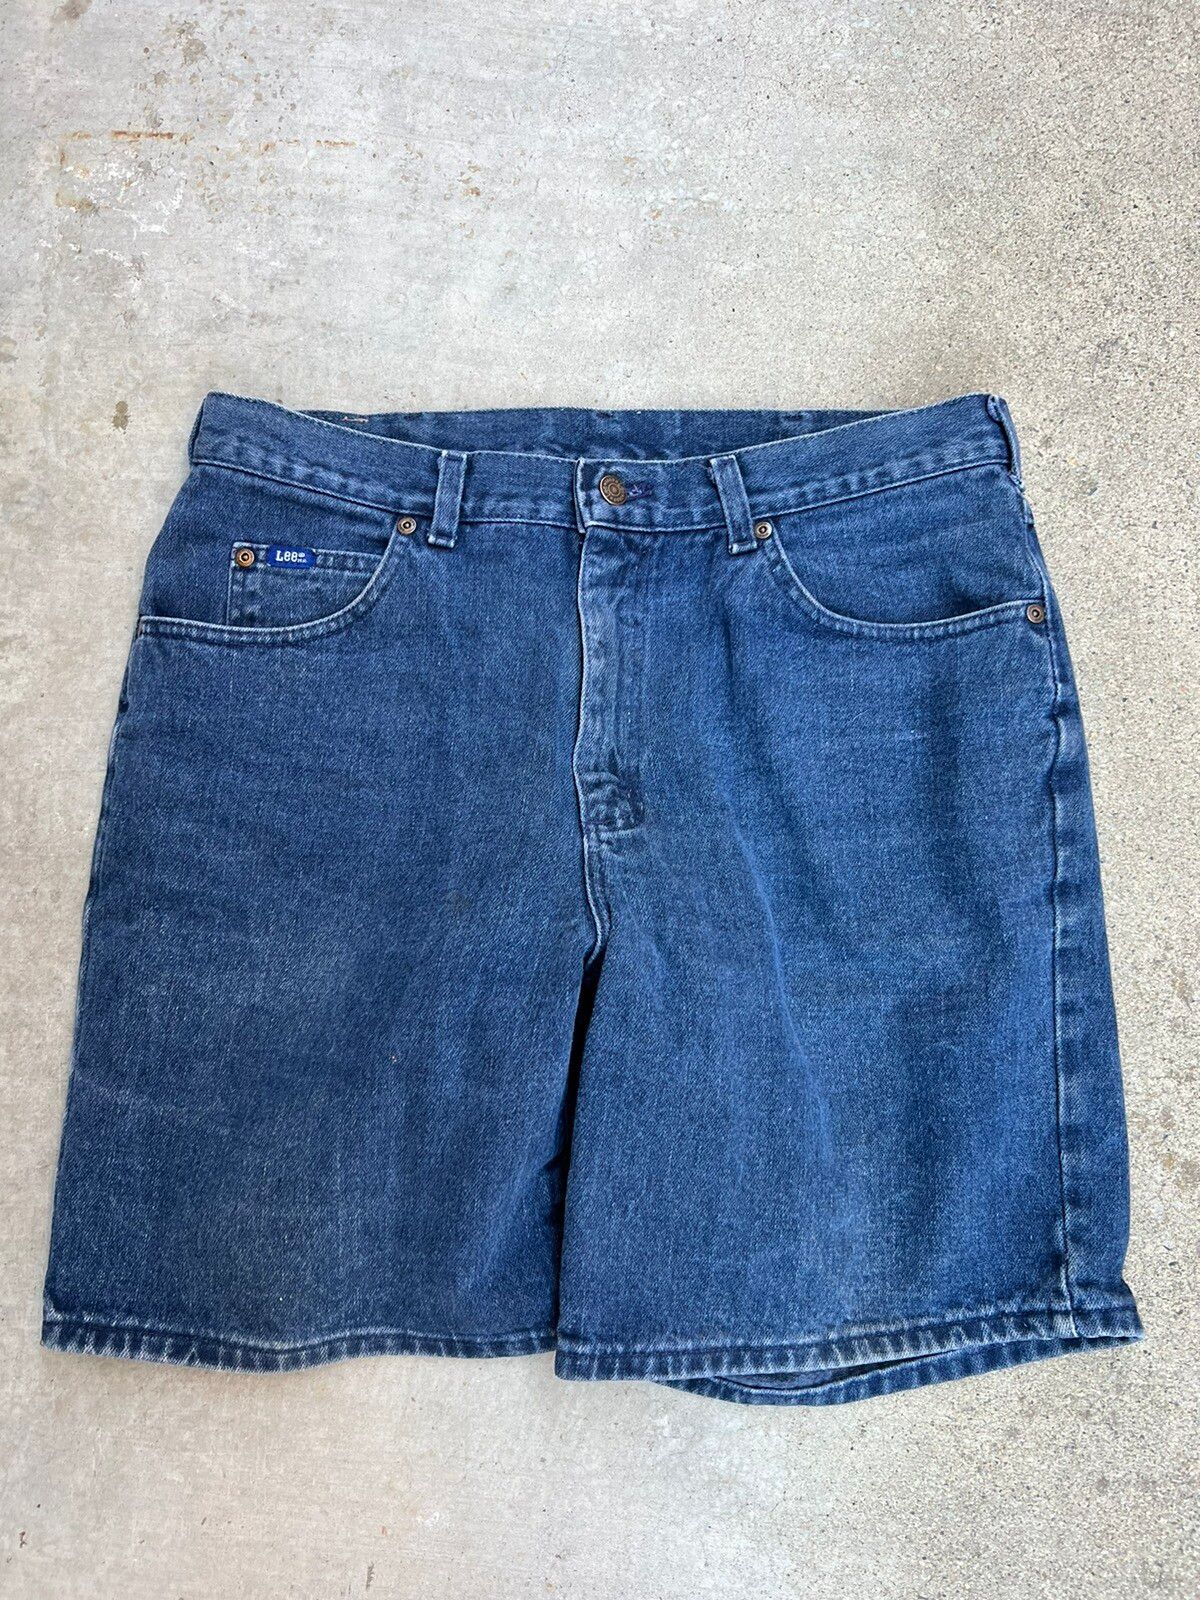 Vintage Vintage 90s faded Lee shorts Size US 34 / EU 50 - 2 Preview